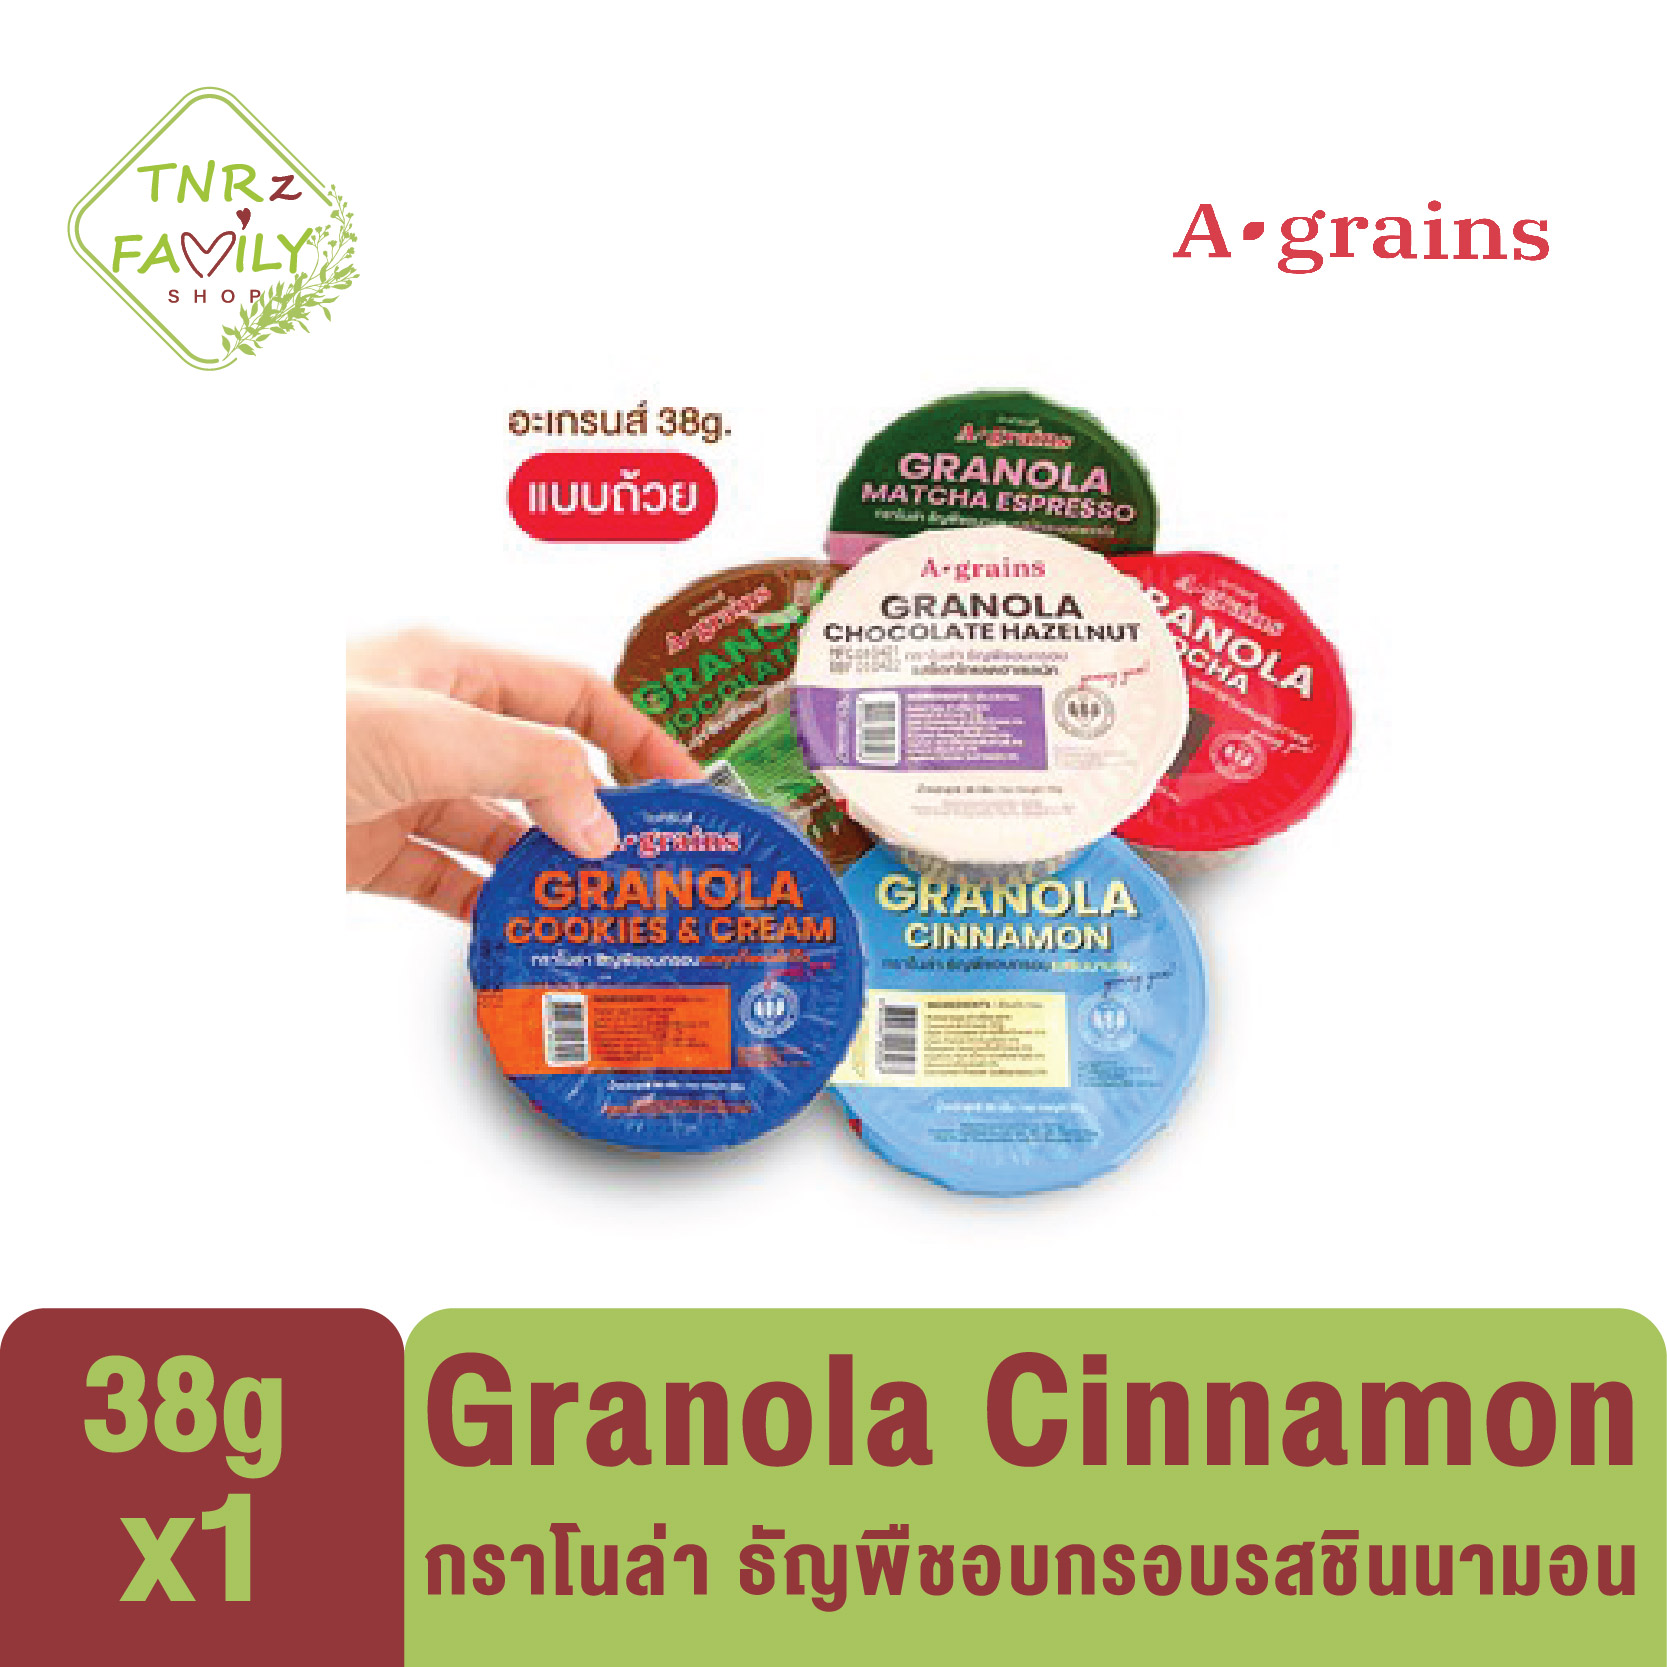 [38g]A-grains Granola กราโนล่า ธัญพืชอบกรอบ ขนาด 38กรัม แบบถ้วย